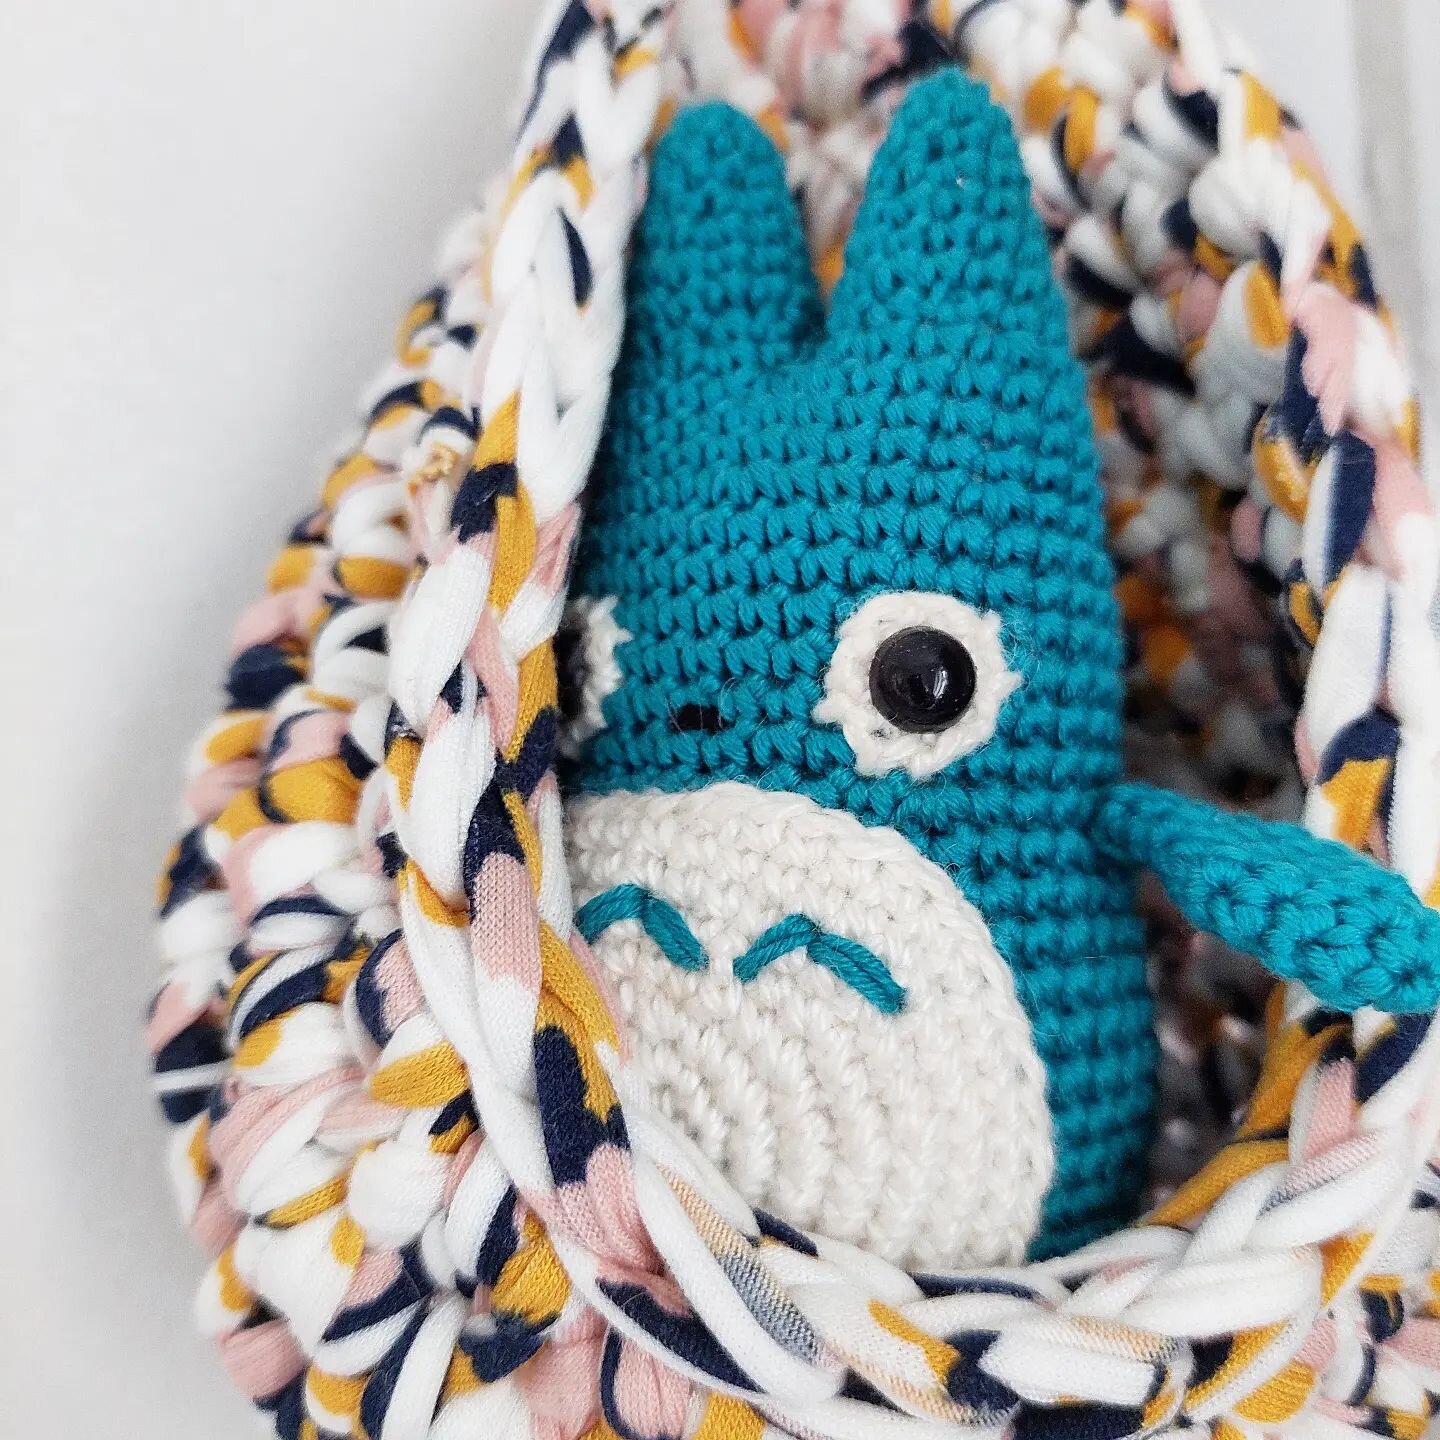 Totoro's little friend!
.
.
#hookoflife #crochet❤ #crochetlovers #crochetingaddict #handmade #feitoamao #crochetastherapy 
#craftoftheday #crocheteirasviciadas #crocheteiras #crochetofinstagram #crocheportugal #crochetersoftheworld
#agulhasdeportugal